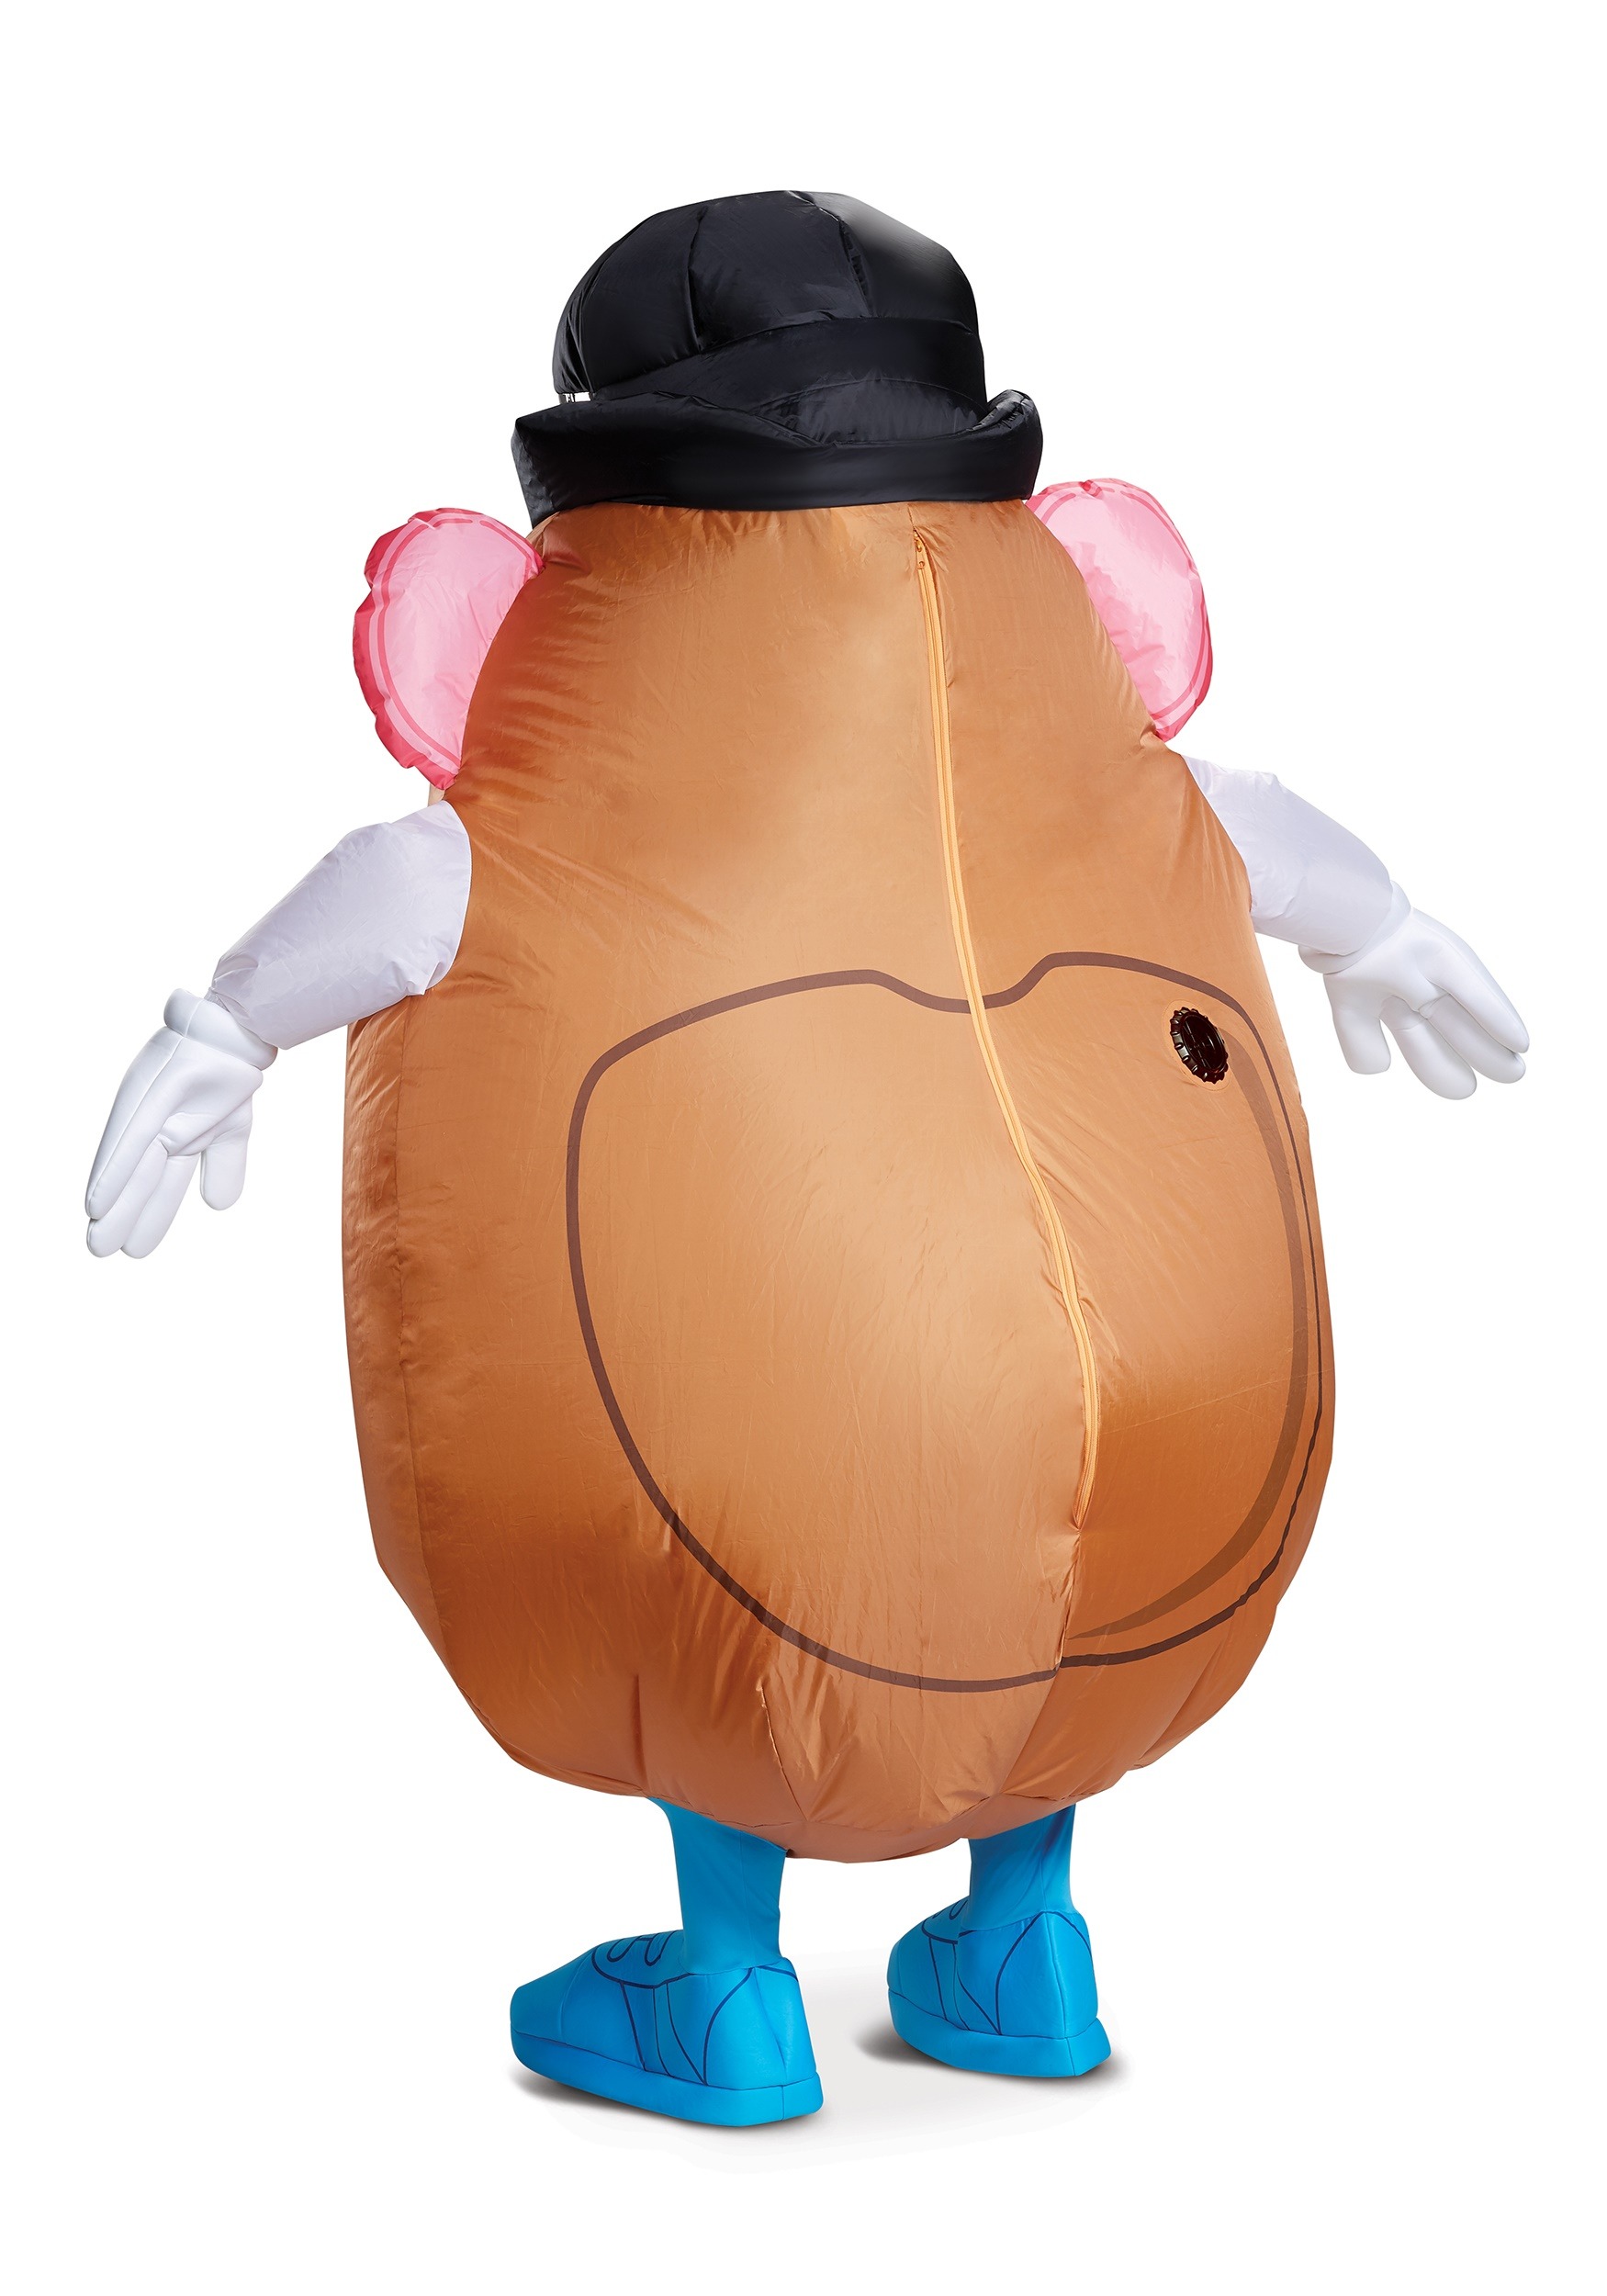 mr potato head baby costume